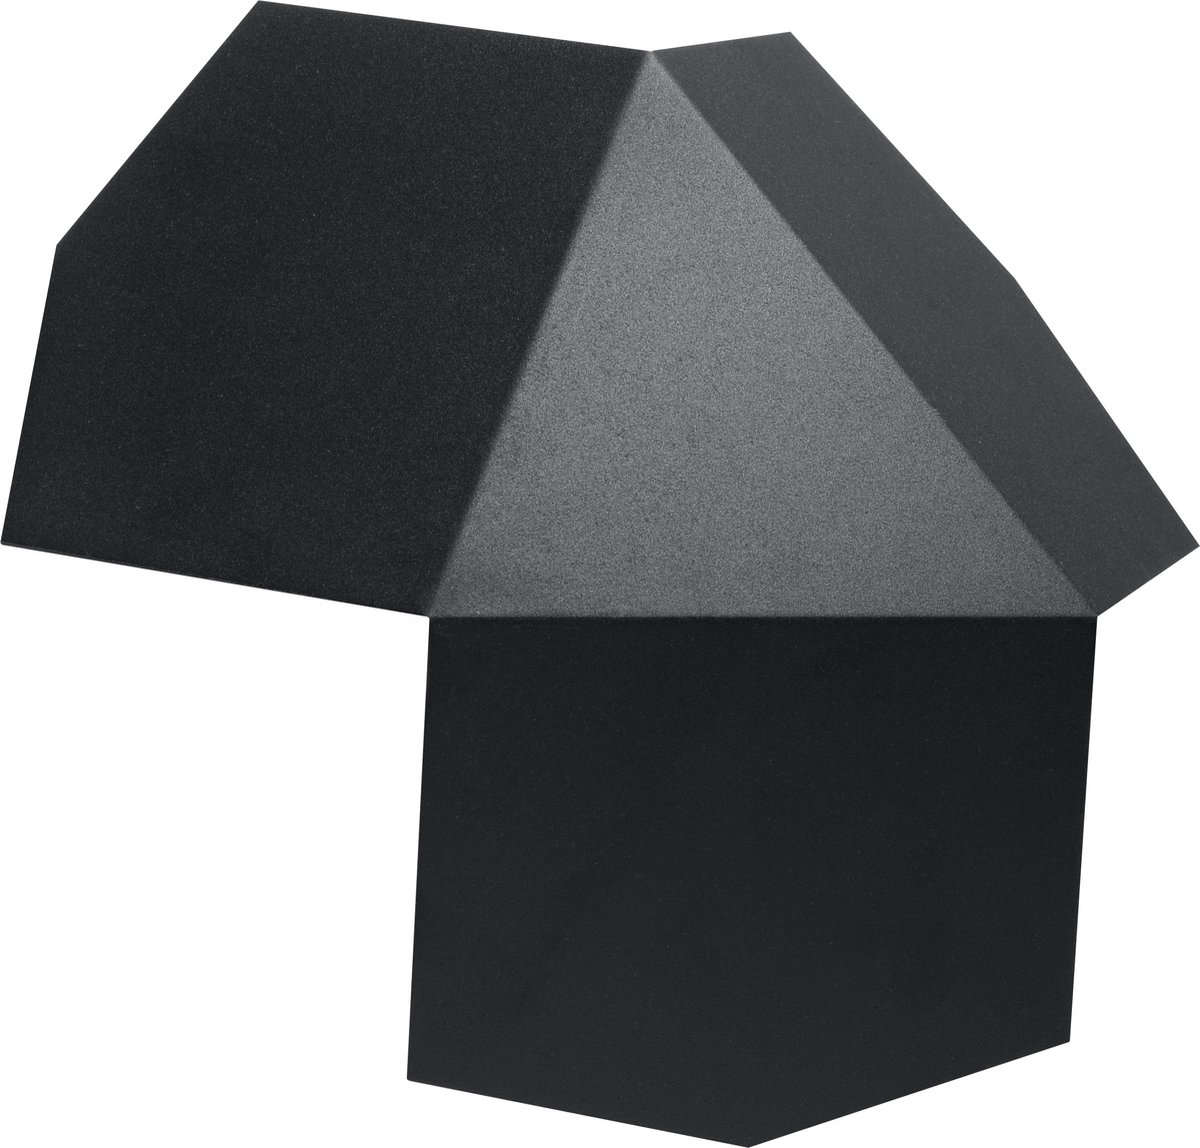 Light Your Home Designer's Lightbox Shades Wandlamp - Ø 30 Cm - Metaal - 2xG9 - Woonkamer - Eetkamer - Black